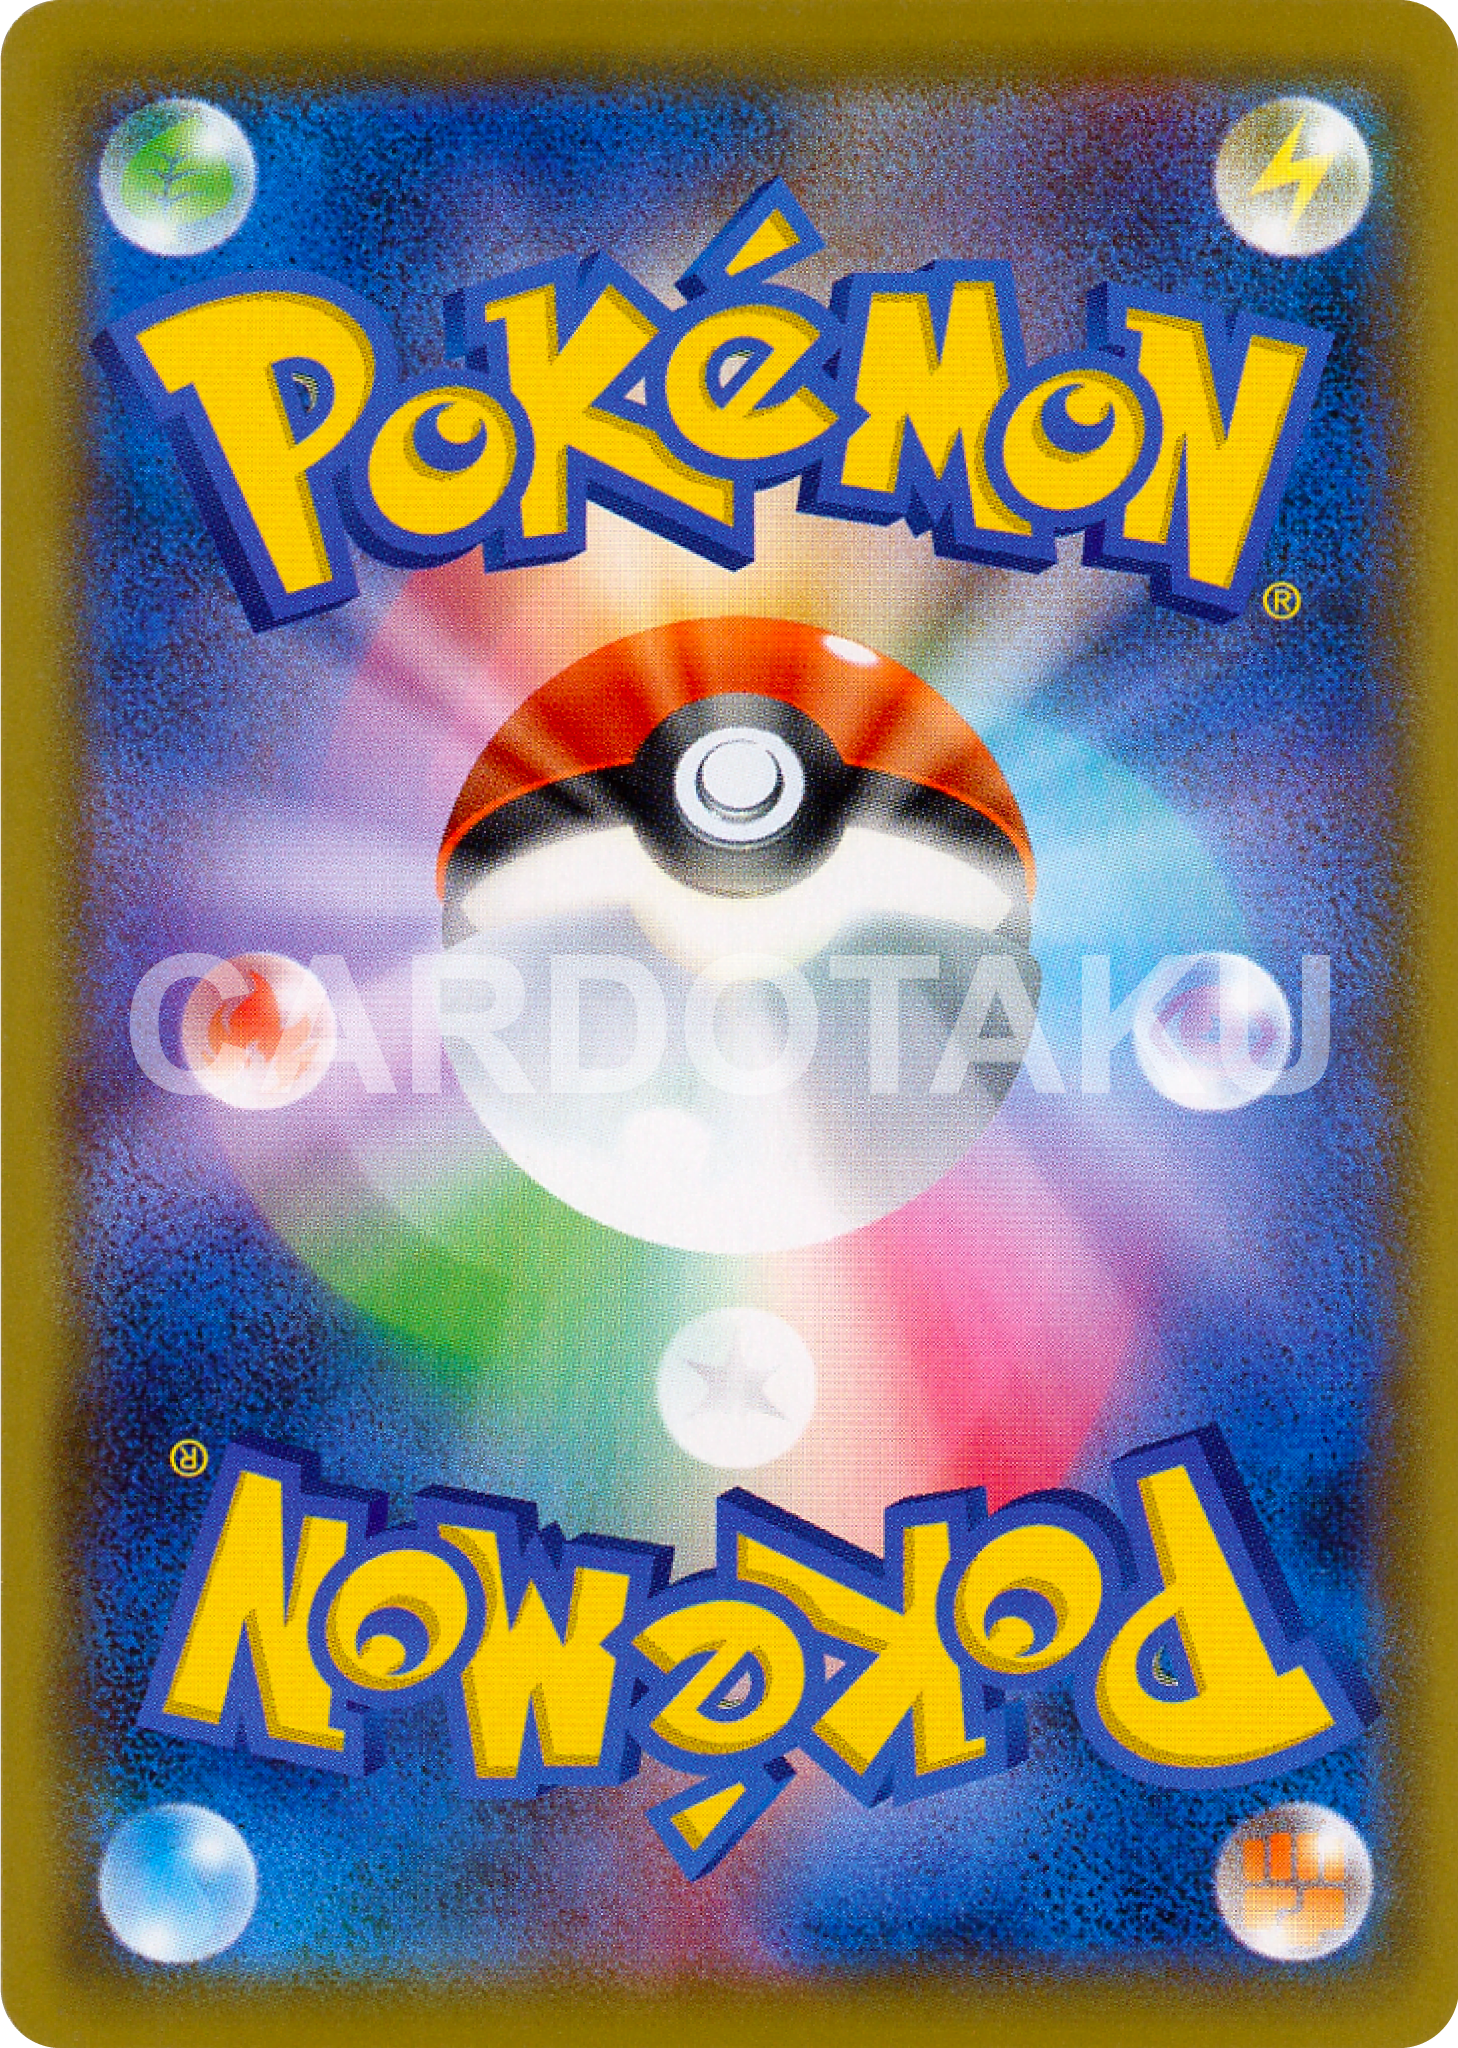 Japanese Pokémon Trading Card Game back